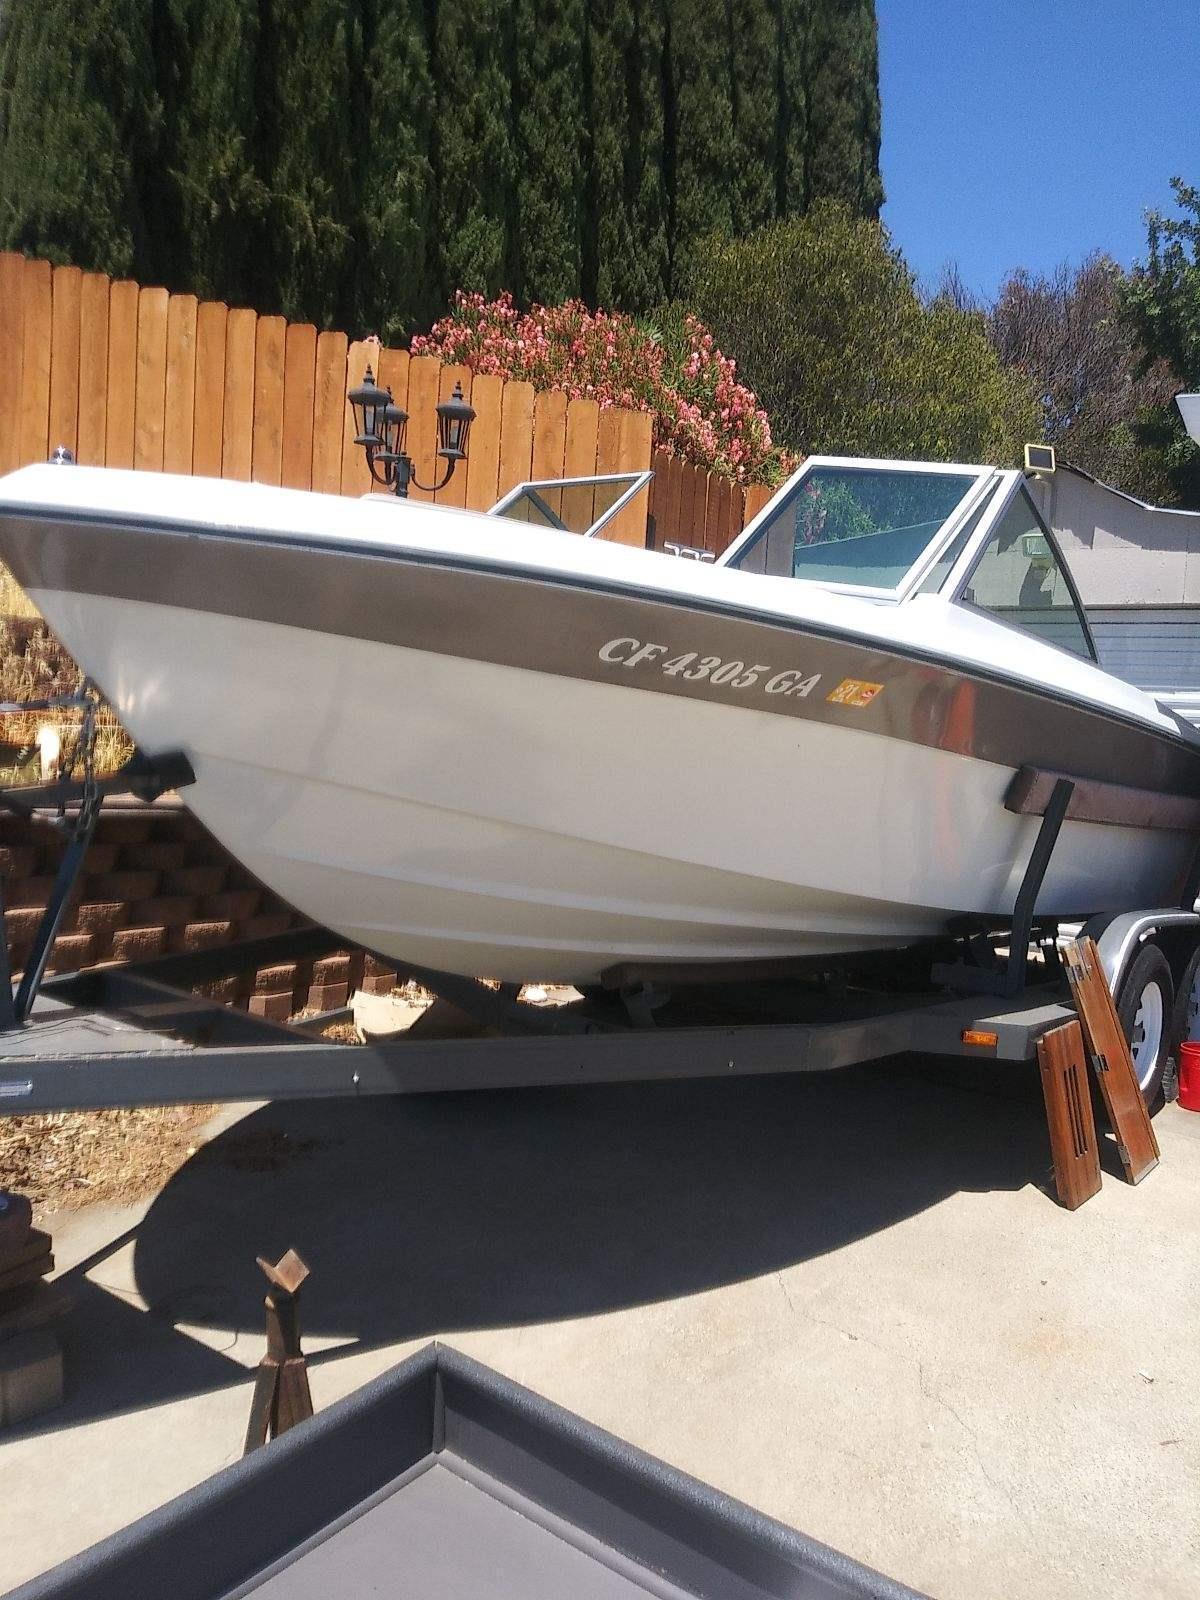 Cobalt 19' Boat Located In Vacaville, CA - Has Trailer